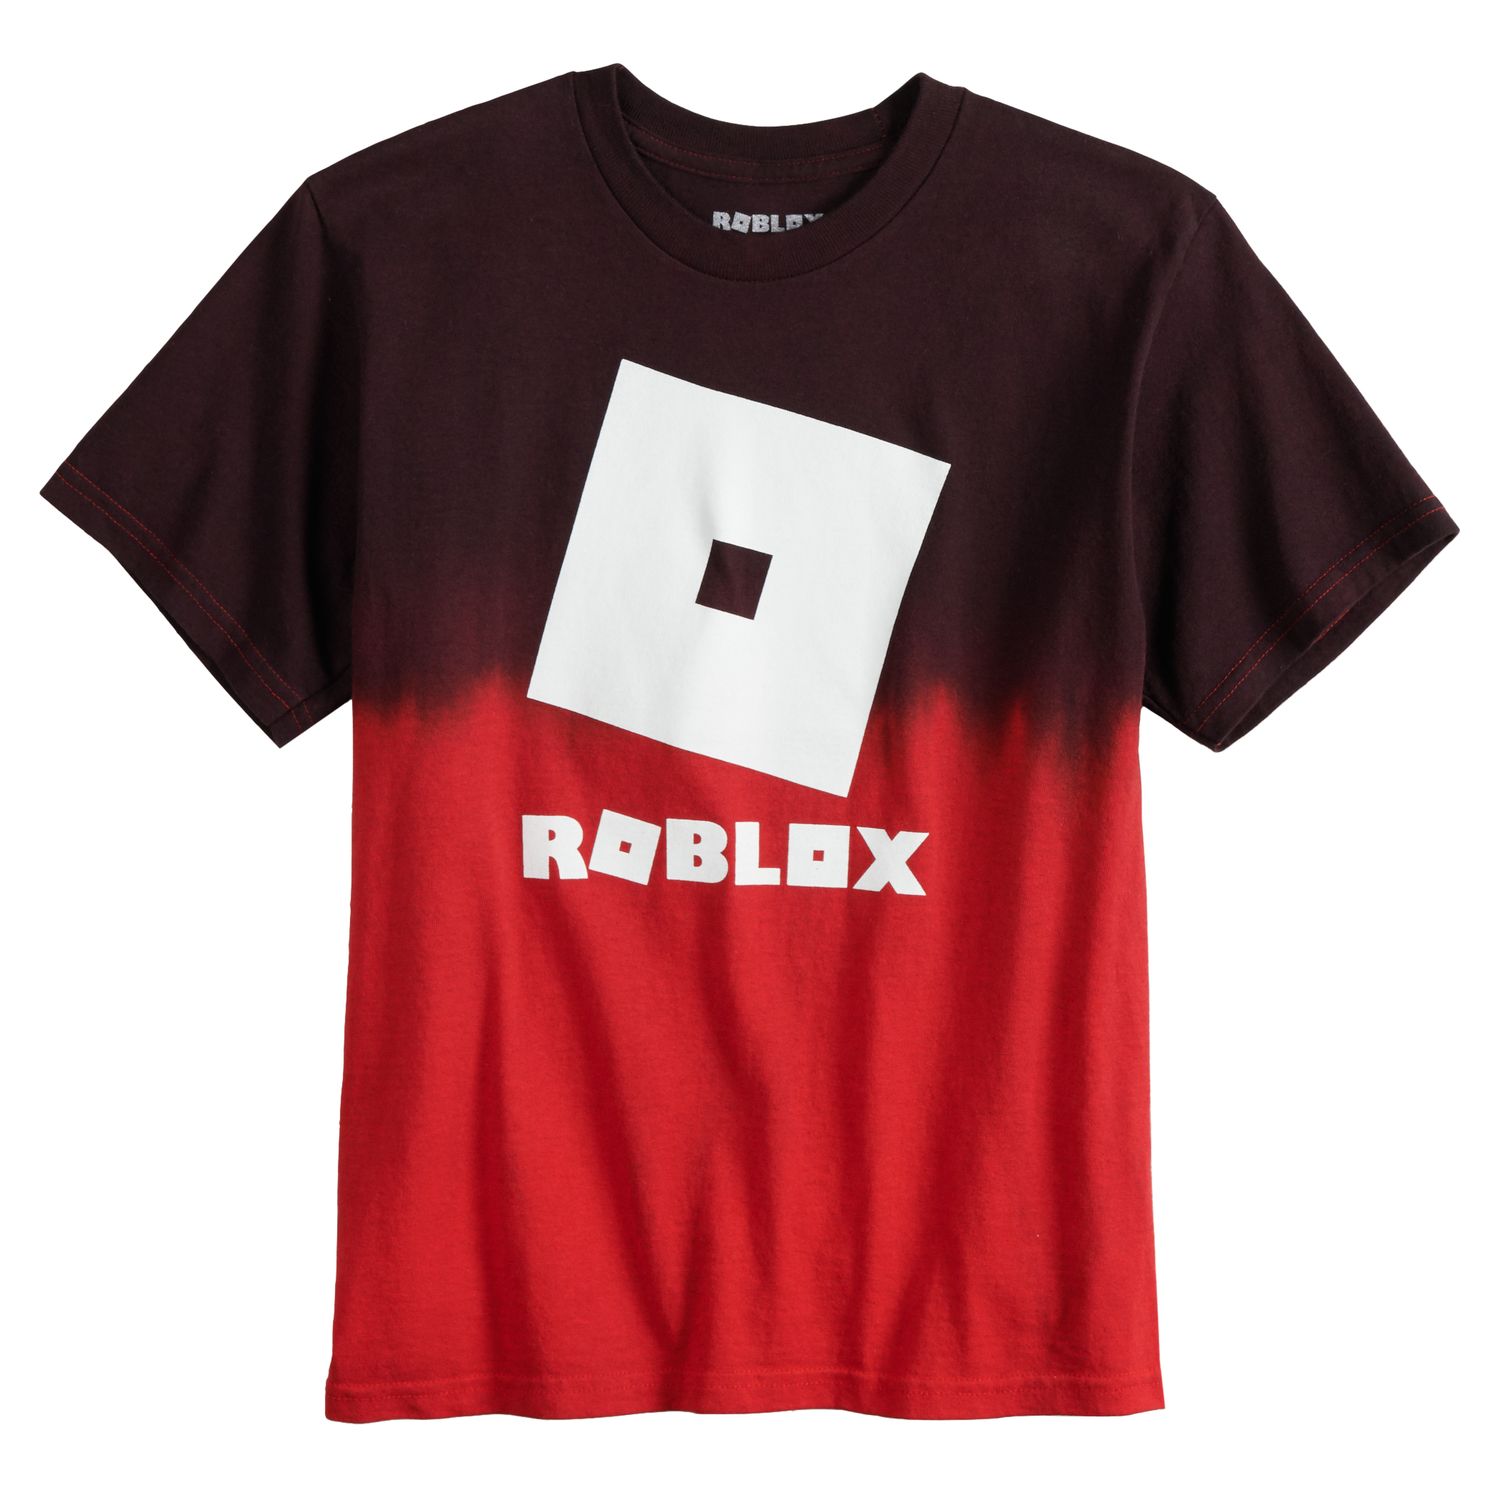 Roblox T Shirt For Boys - roblox shirt real life